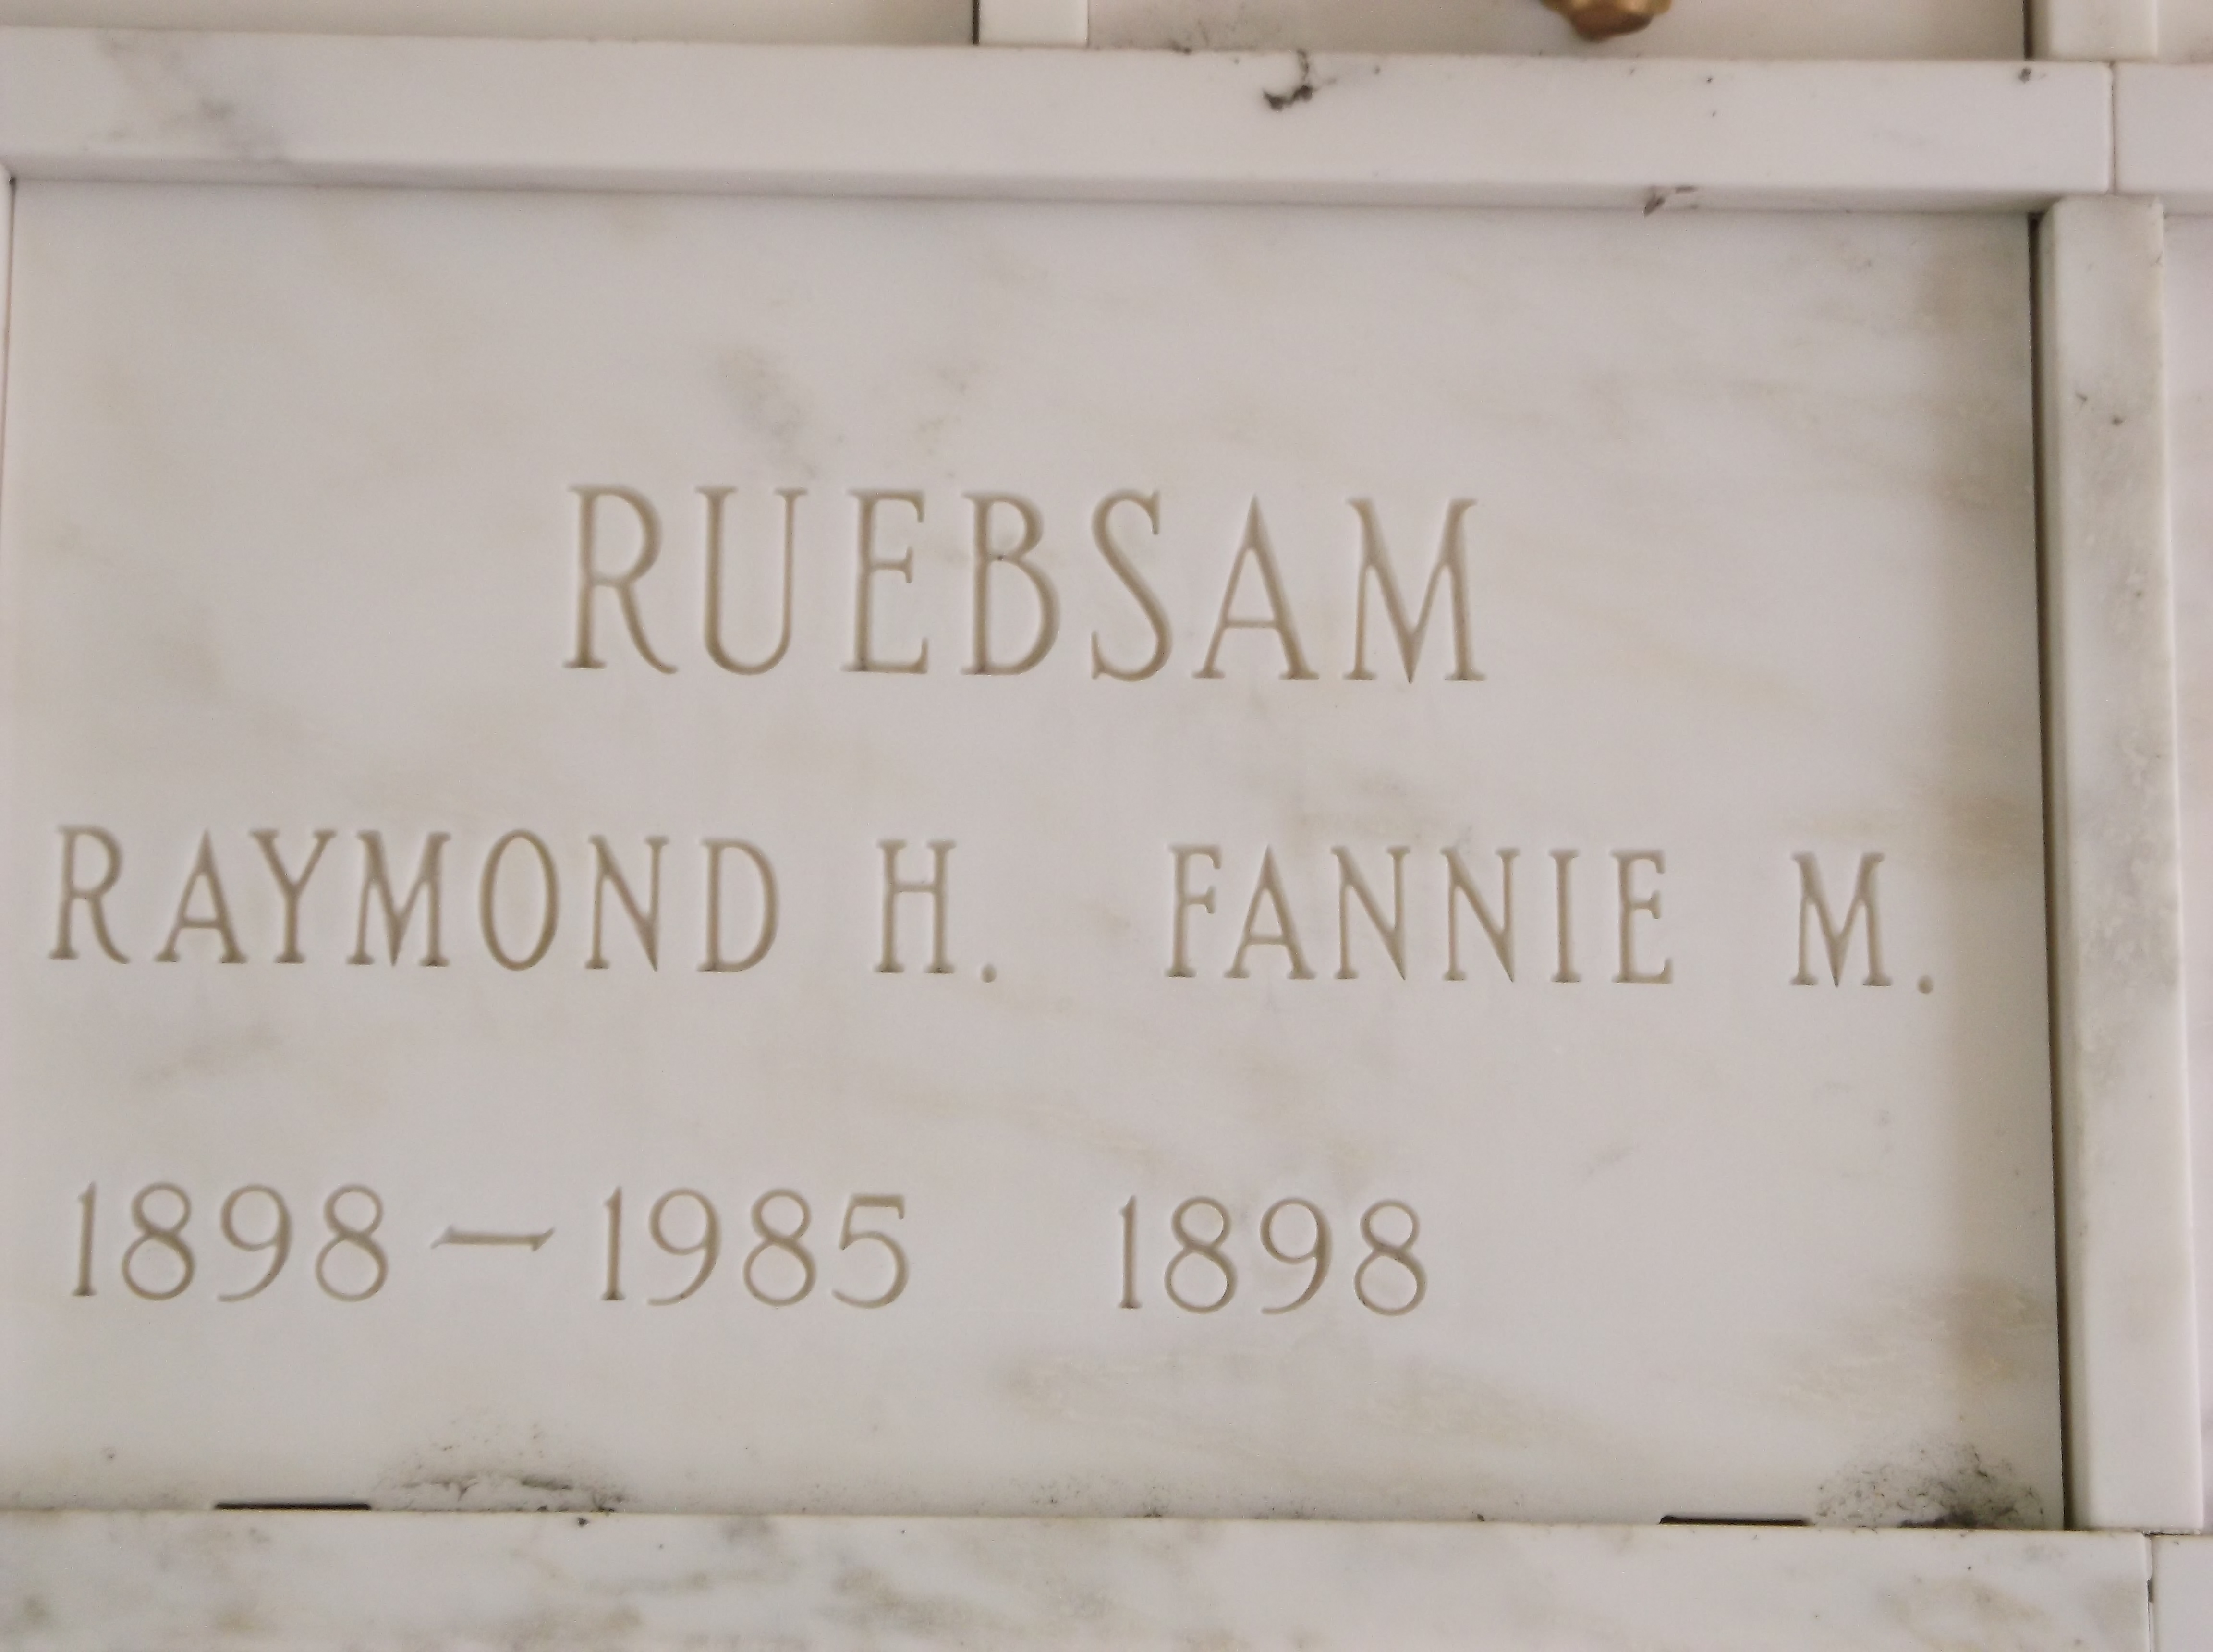 Raymond H Ruebsam